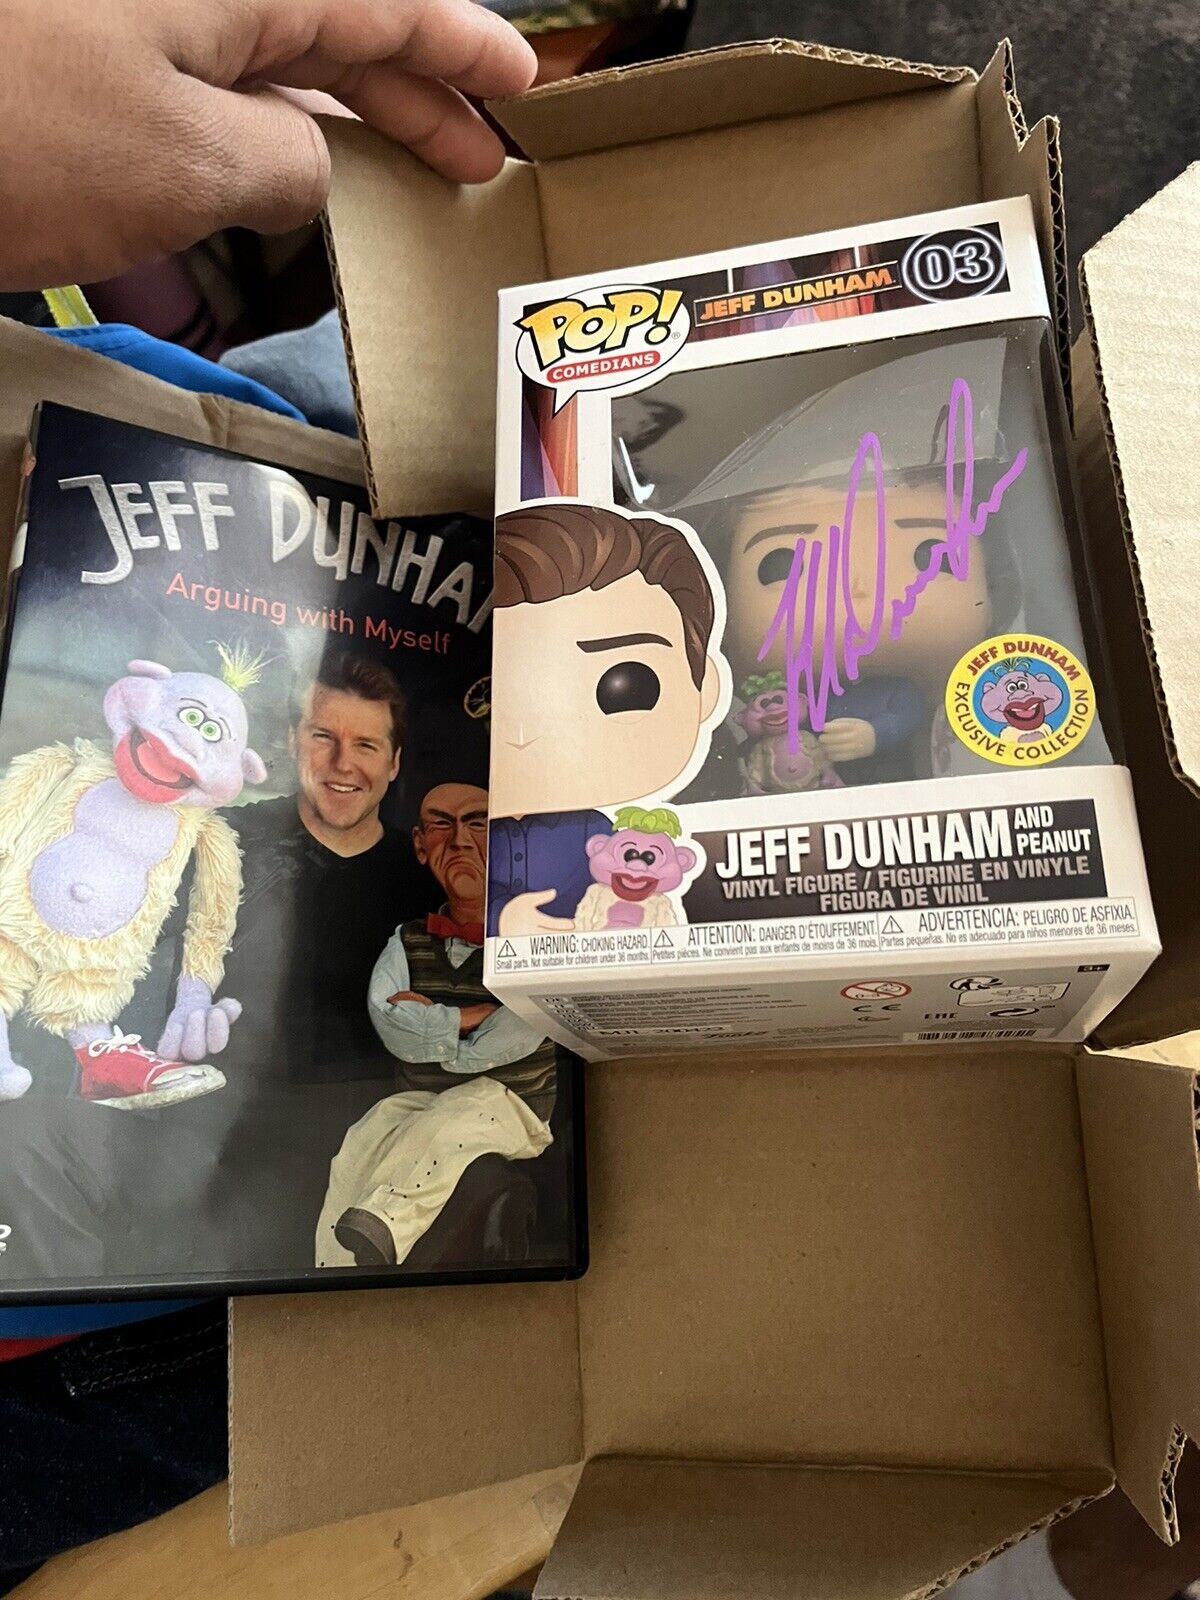 Funko Pop Jeff Dunham Peanut 03 Autographed Store Exclusive + JEFF DUNHAM DVD